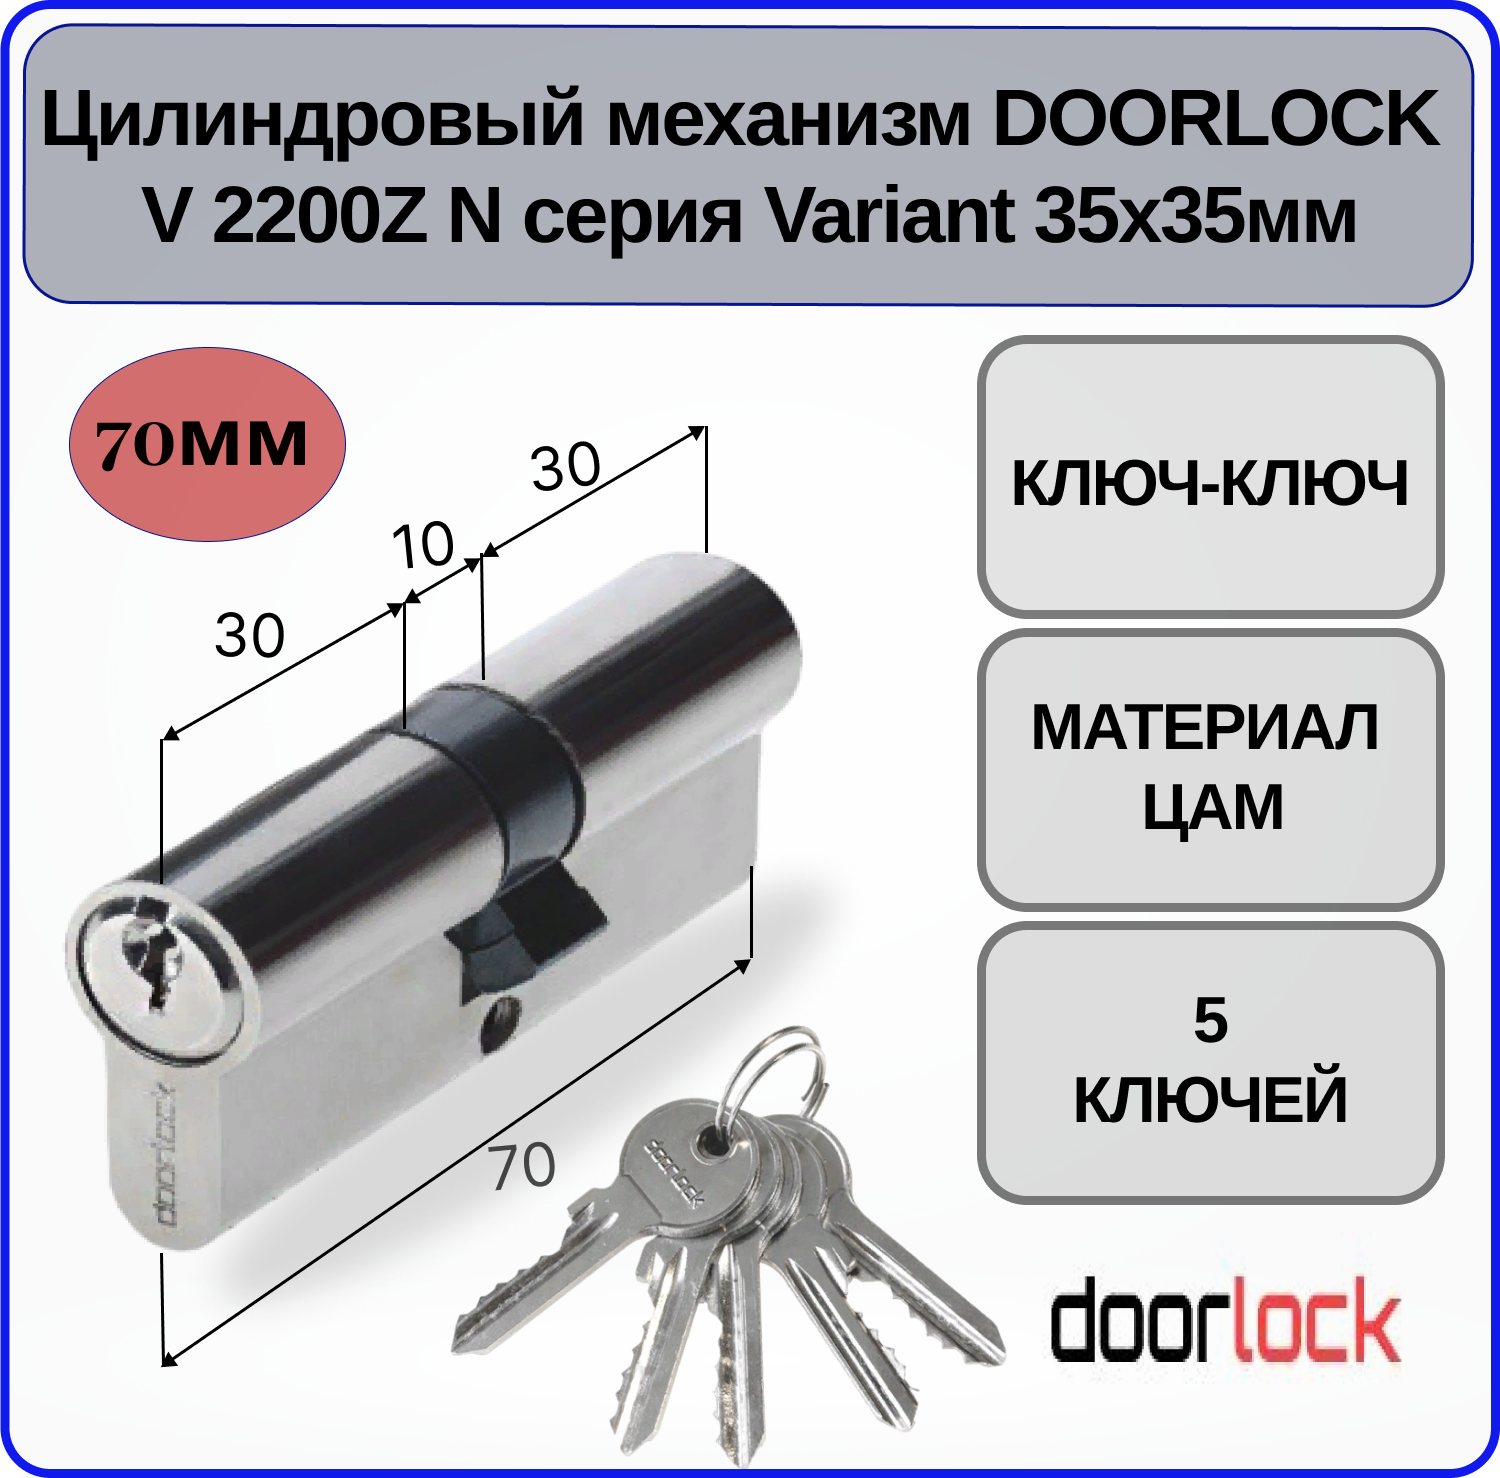 Цилиндровый механизм 70 мм Doorlock V 2200Z N Variant 35x35мм ключ-ключ 5 ключей личинка для замка